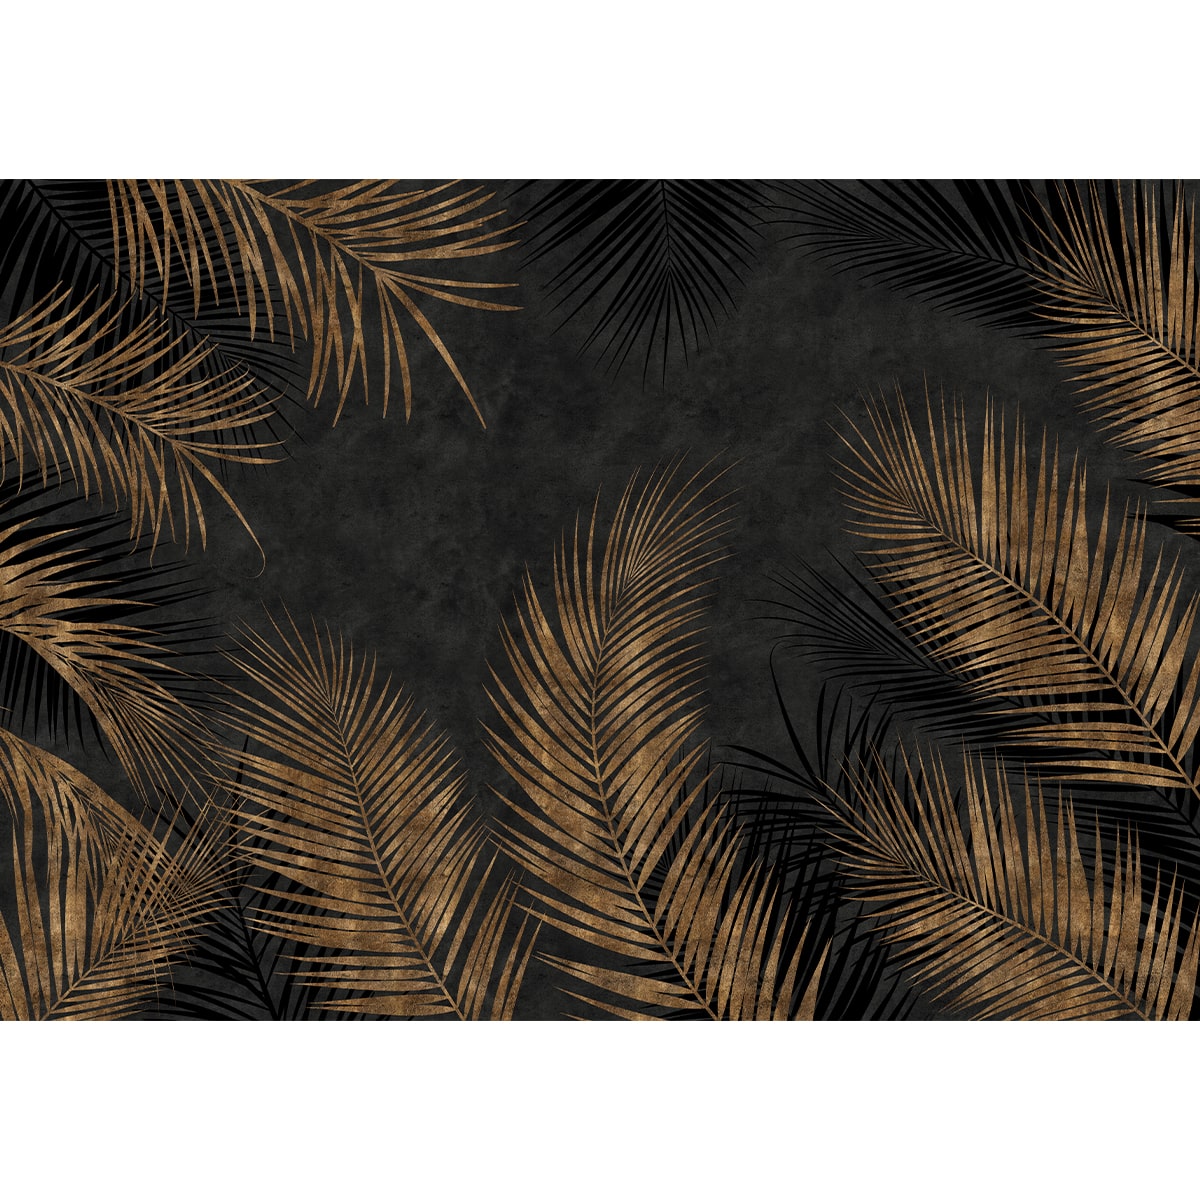 Tropical Theme Wallpaper, Gold Brown Foliage